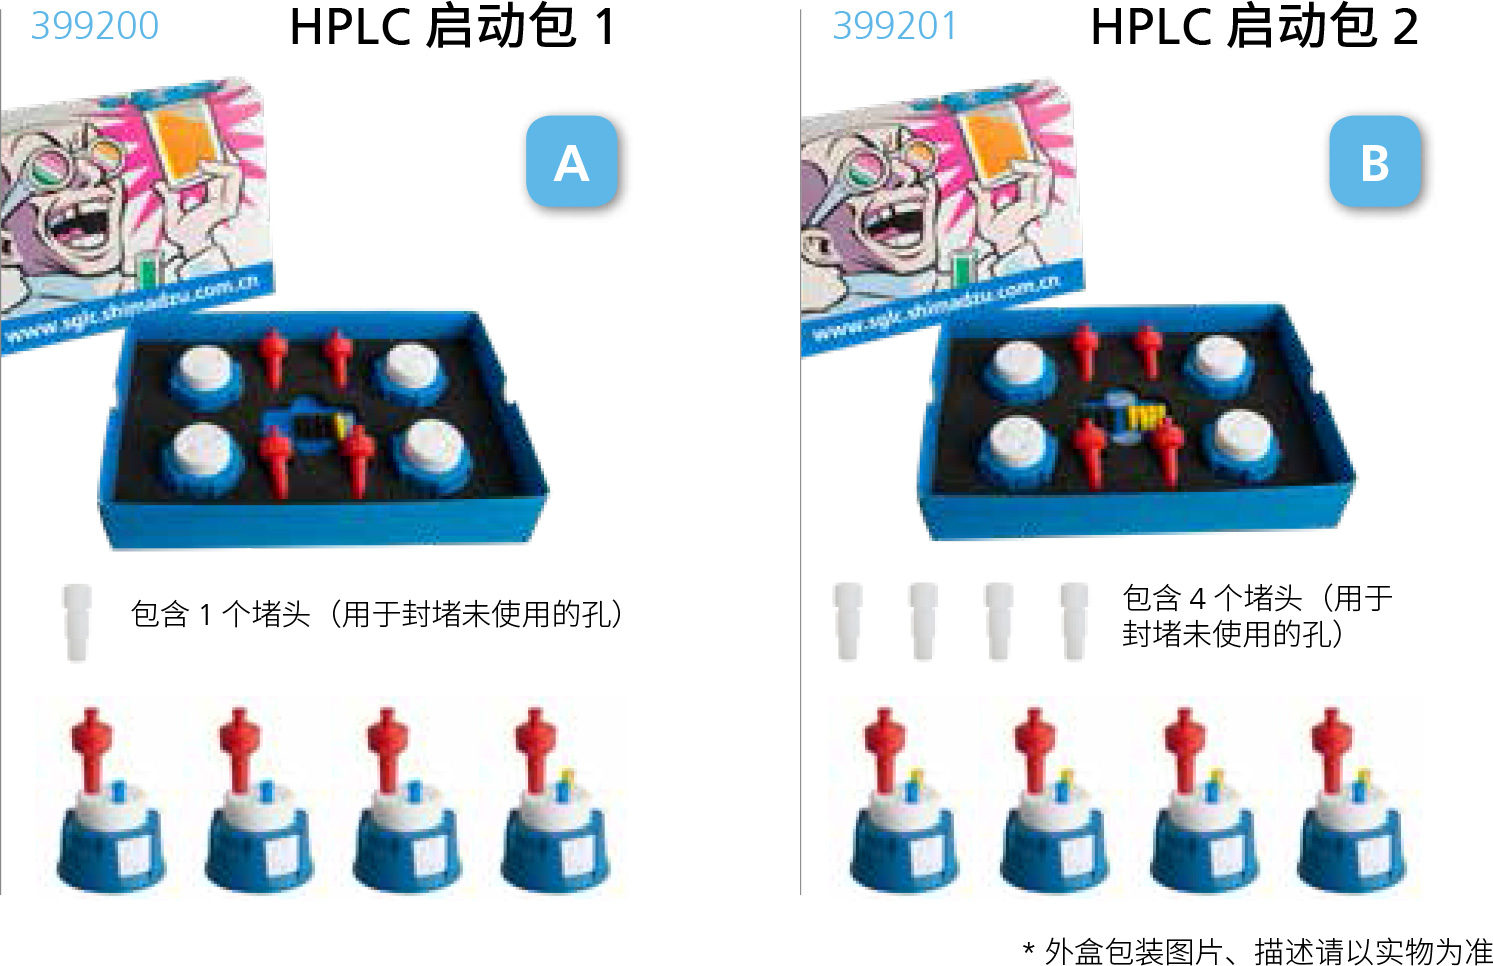 HPLC-启动包-1